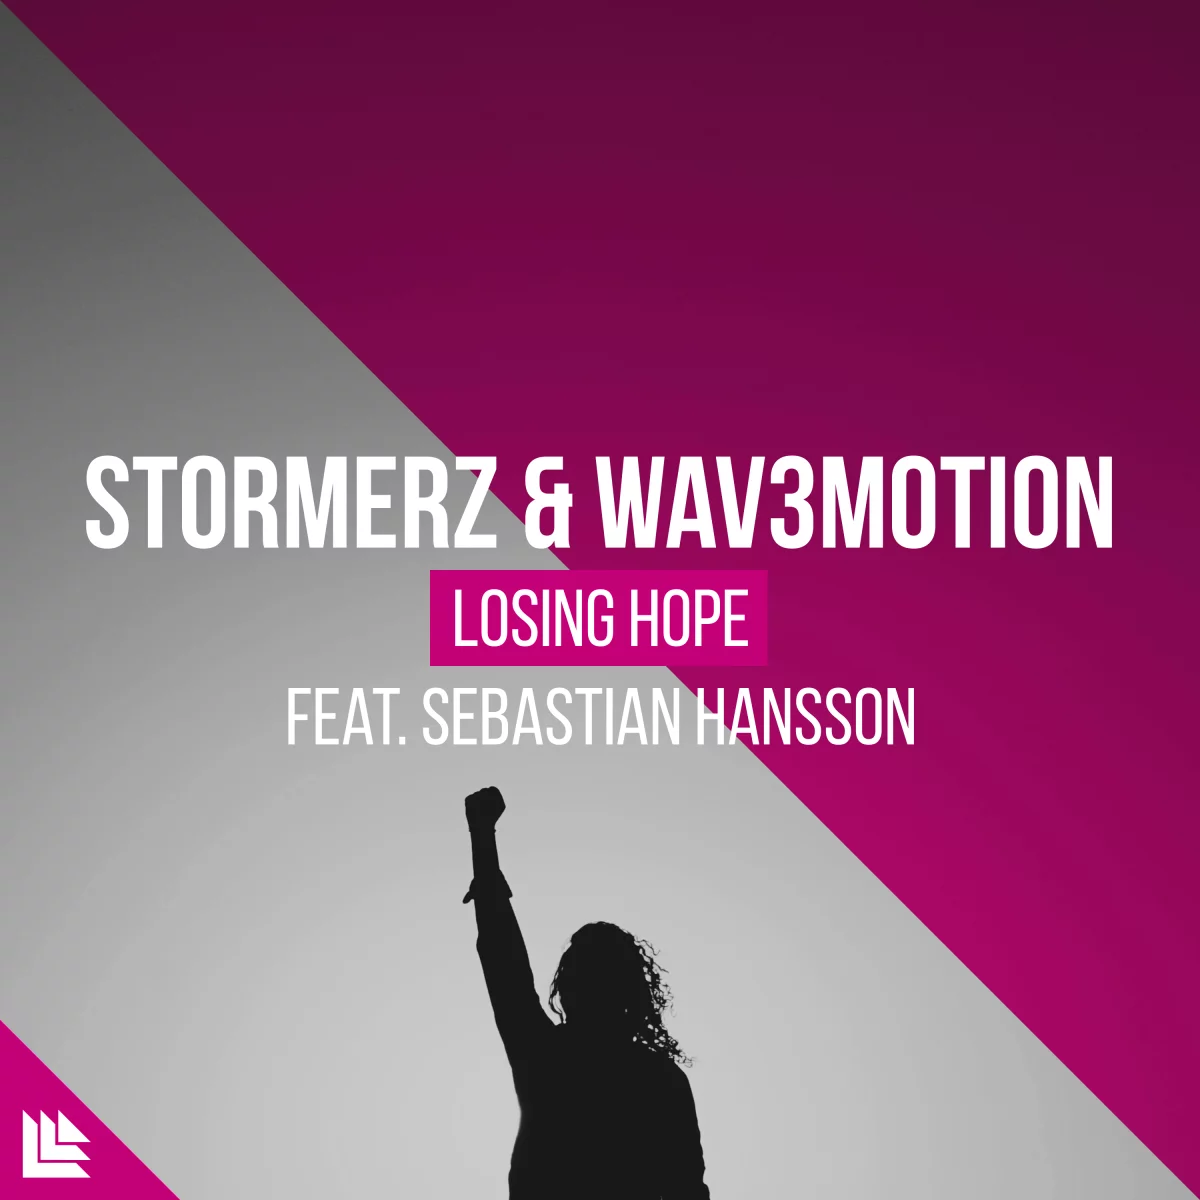 Losing Hope - Stormerz⁠ & Wav3motion⁠ feat. Sebastian Hansson⁠ 